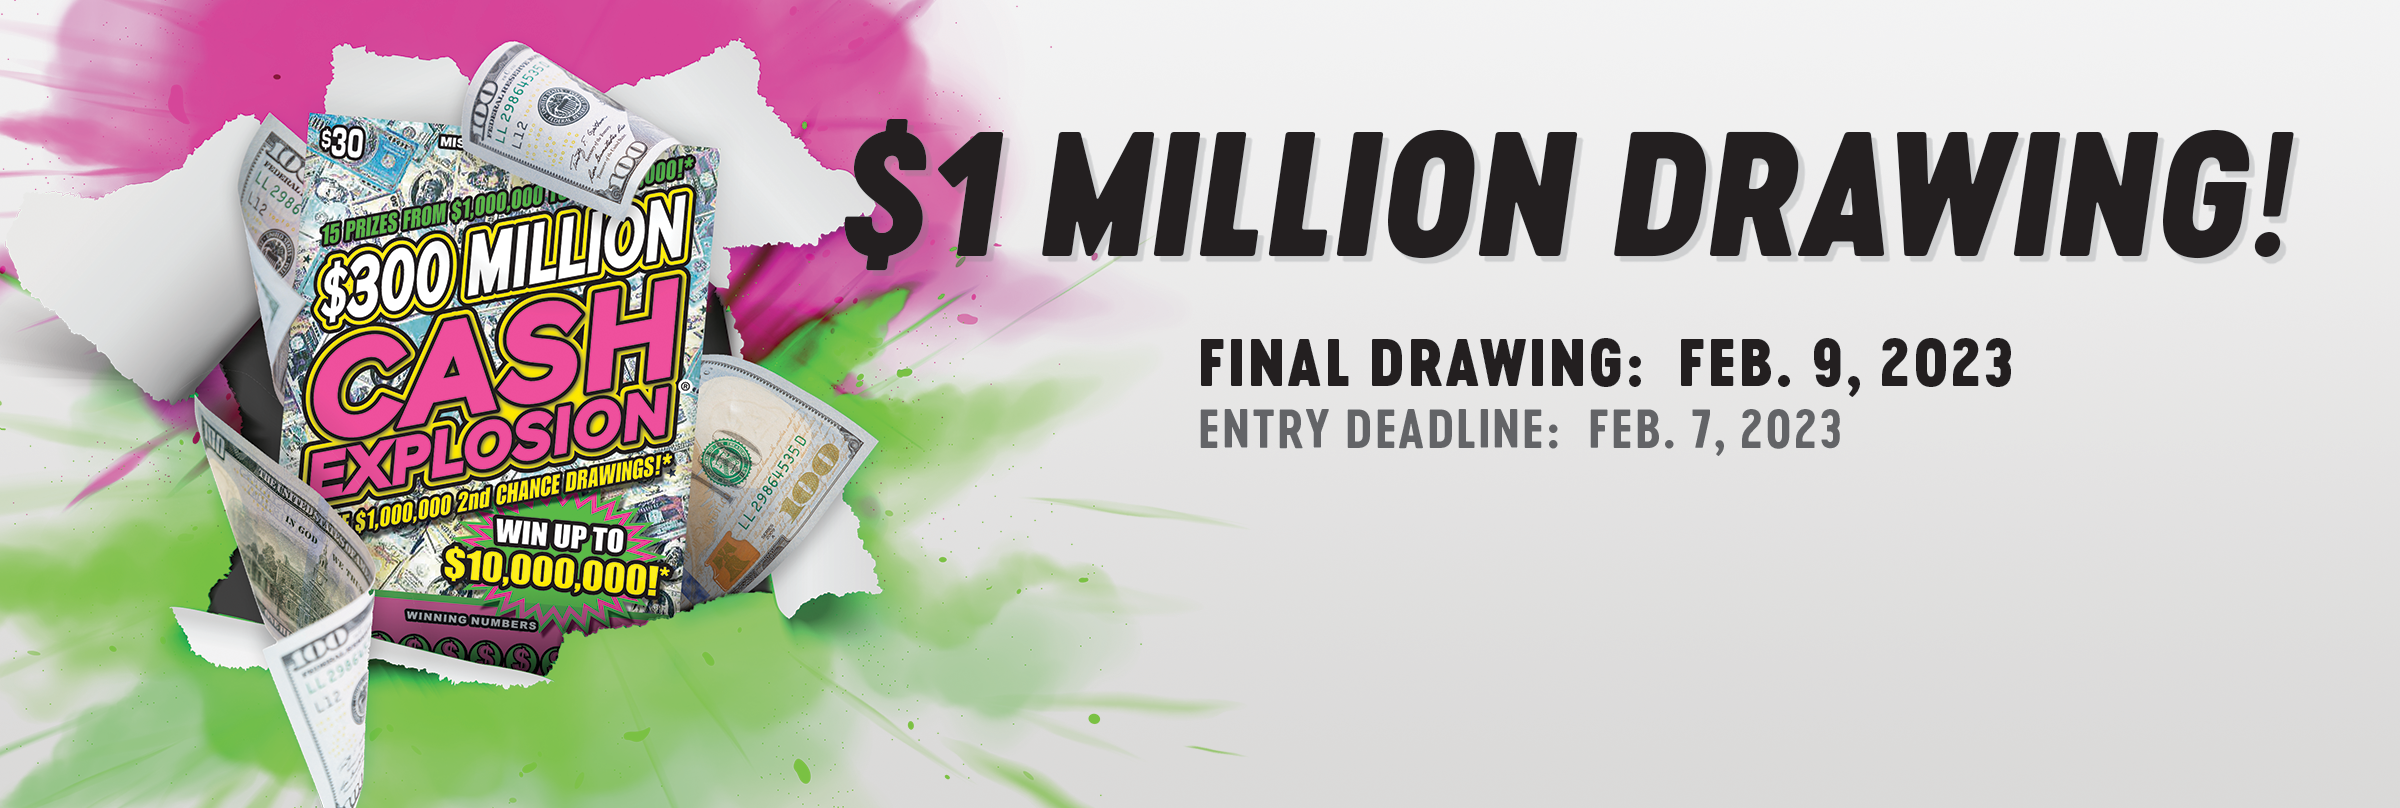 $1 Million "Cash Explosion" Drawing